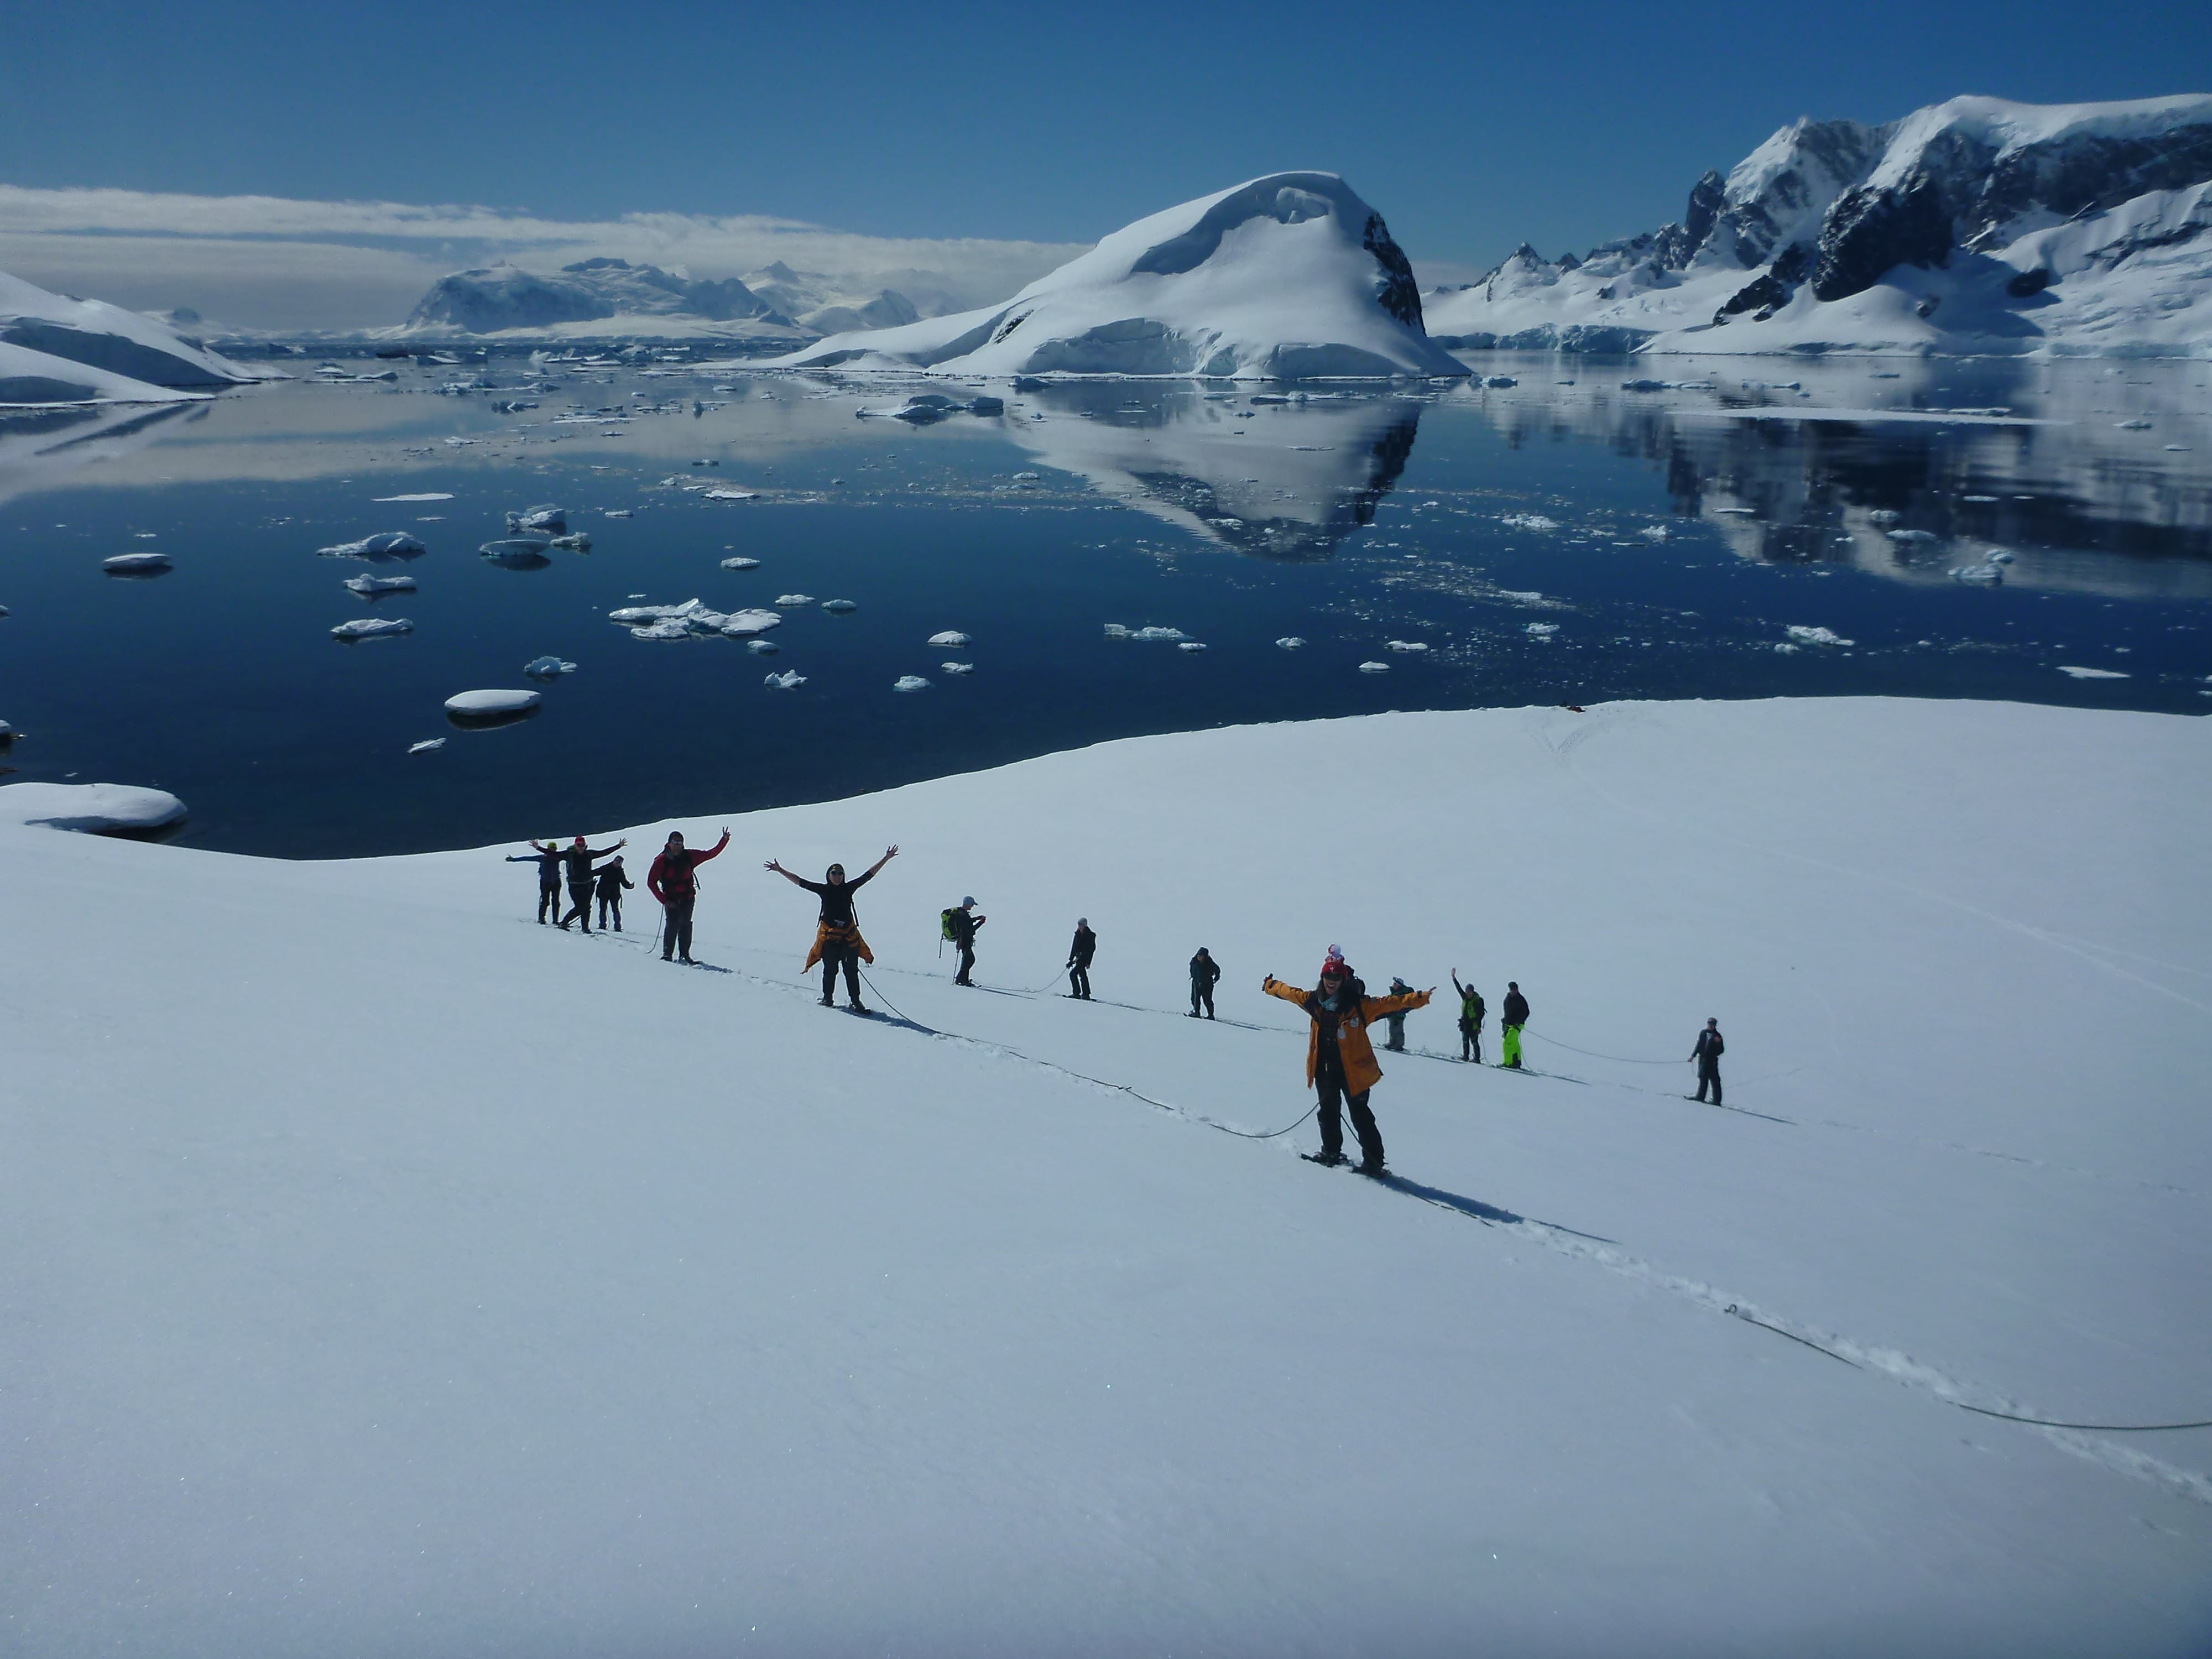 Crucero Antartida Basecamp Qwerty Travel